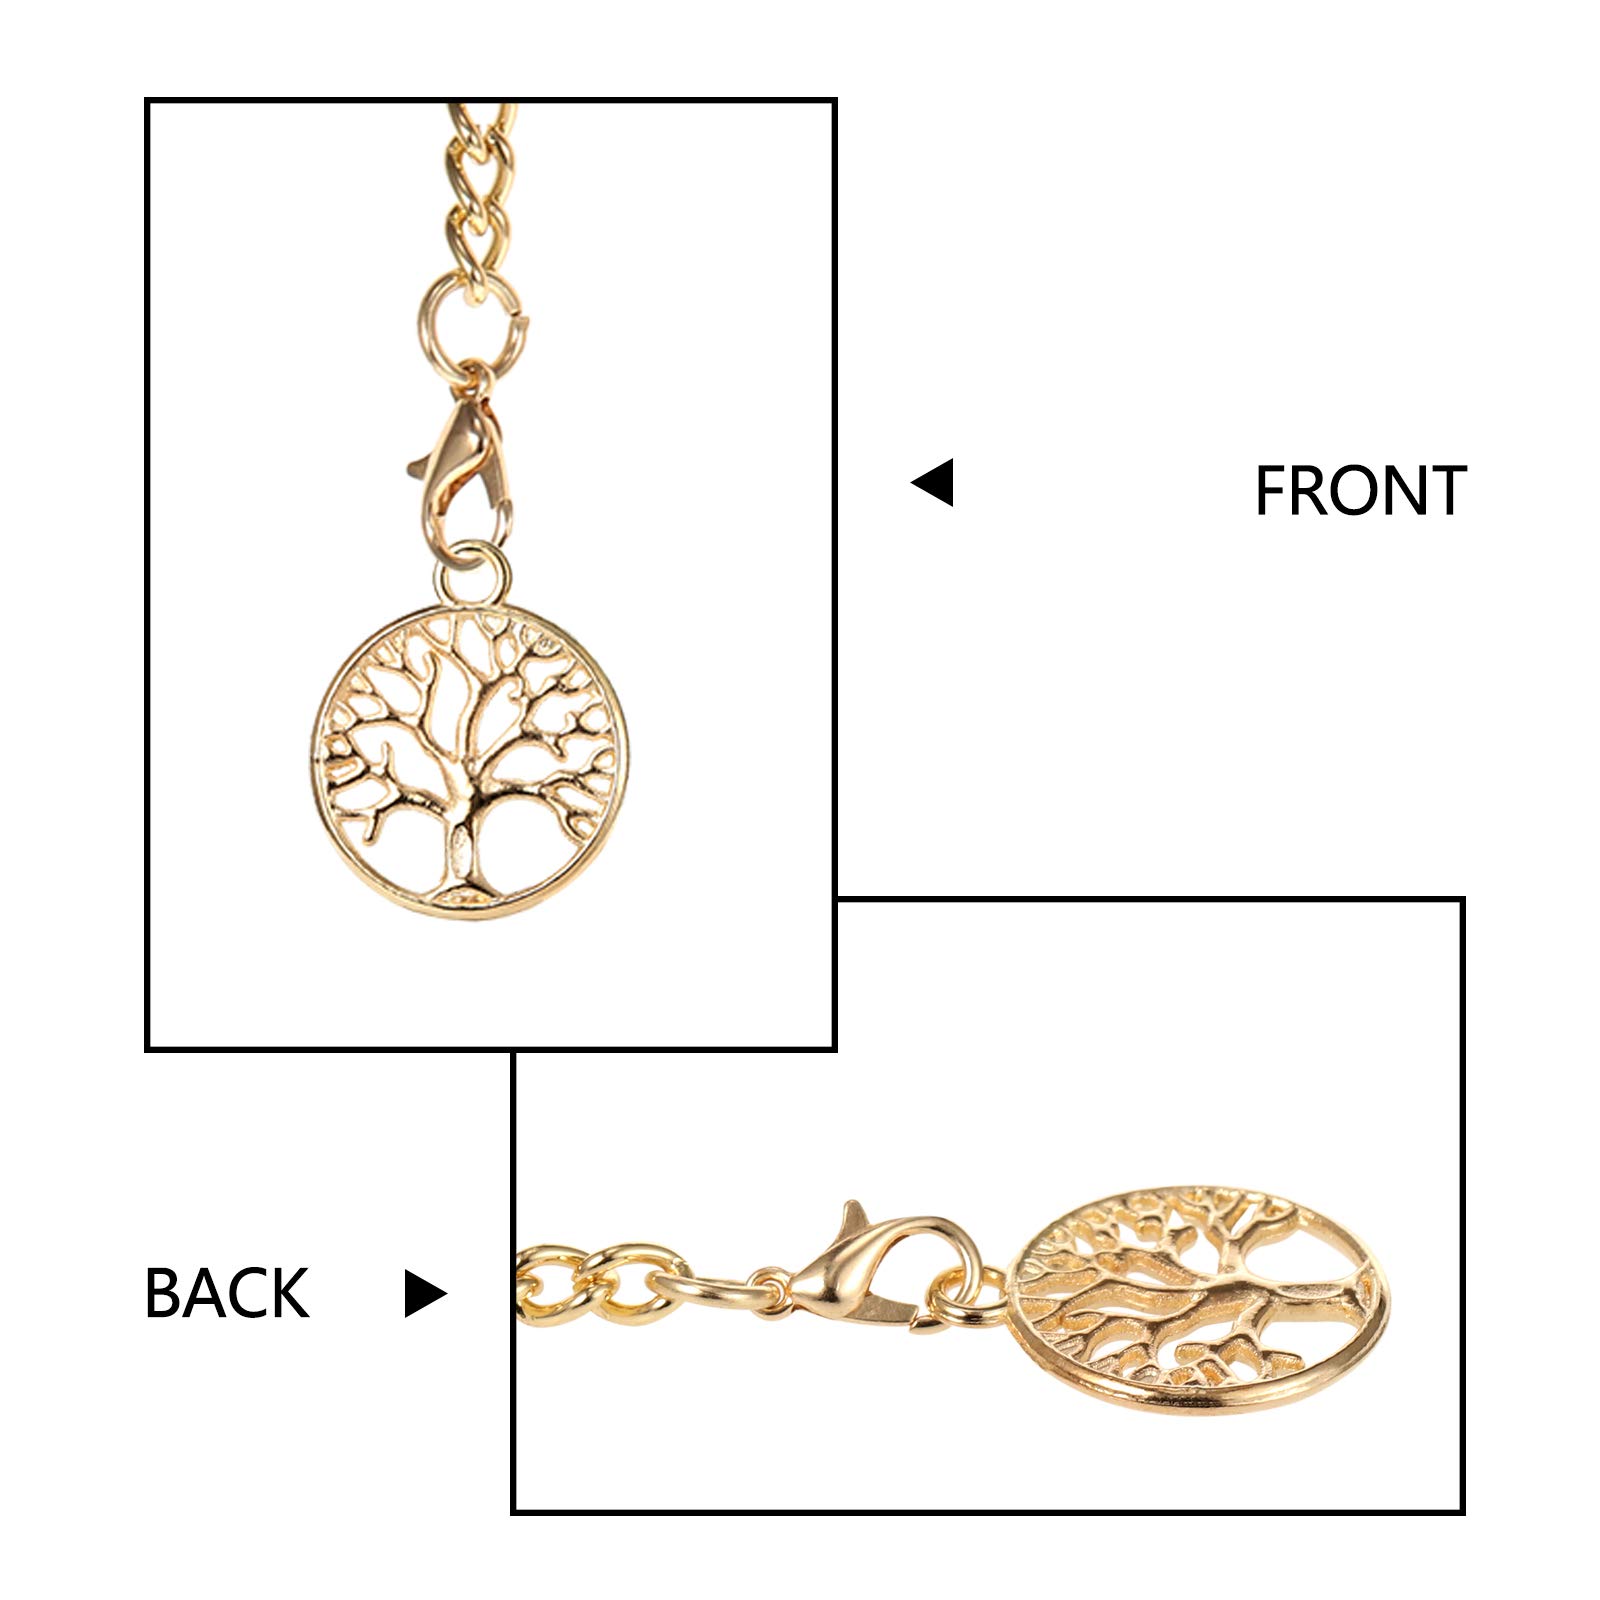 TREEWETO Men's Albert Chain Pocket Watch Curb Link Key Chain 2 Hooks with Antique Life Tree Pendant Design Charm Fob T Bar